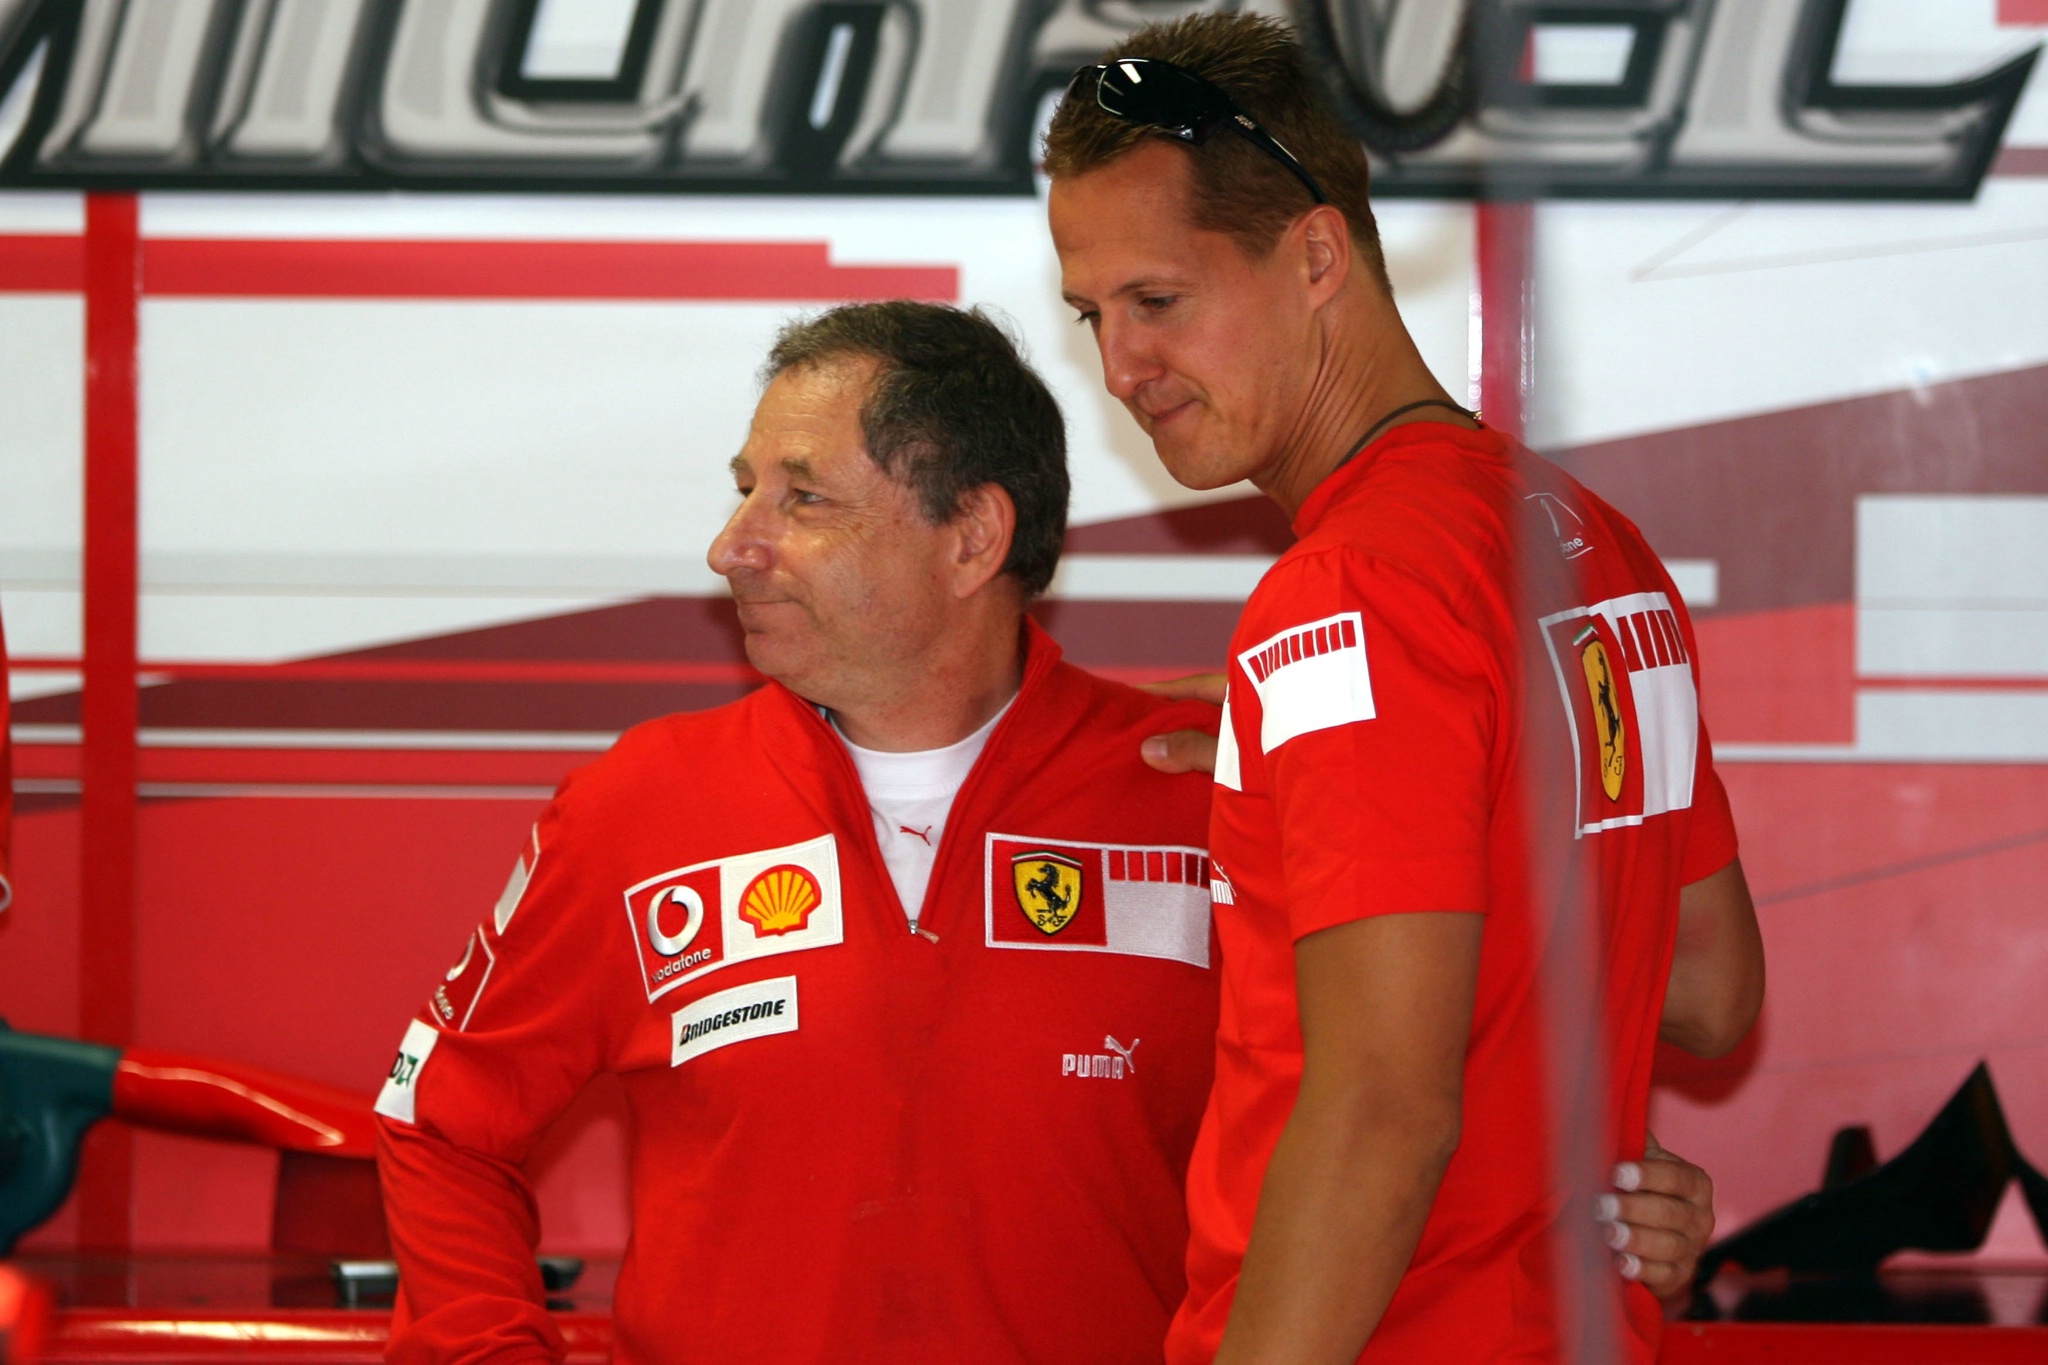  Monza, Italy, Jean Todt (FRA), Scuderia Ferrari, Teamchief, General Manager, Team Principal and Michael Schumacher (GER),